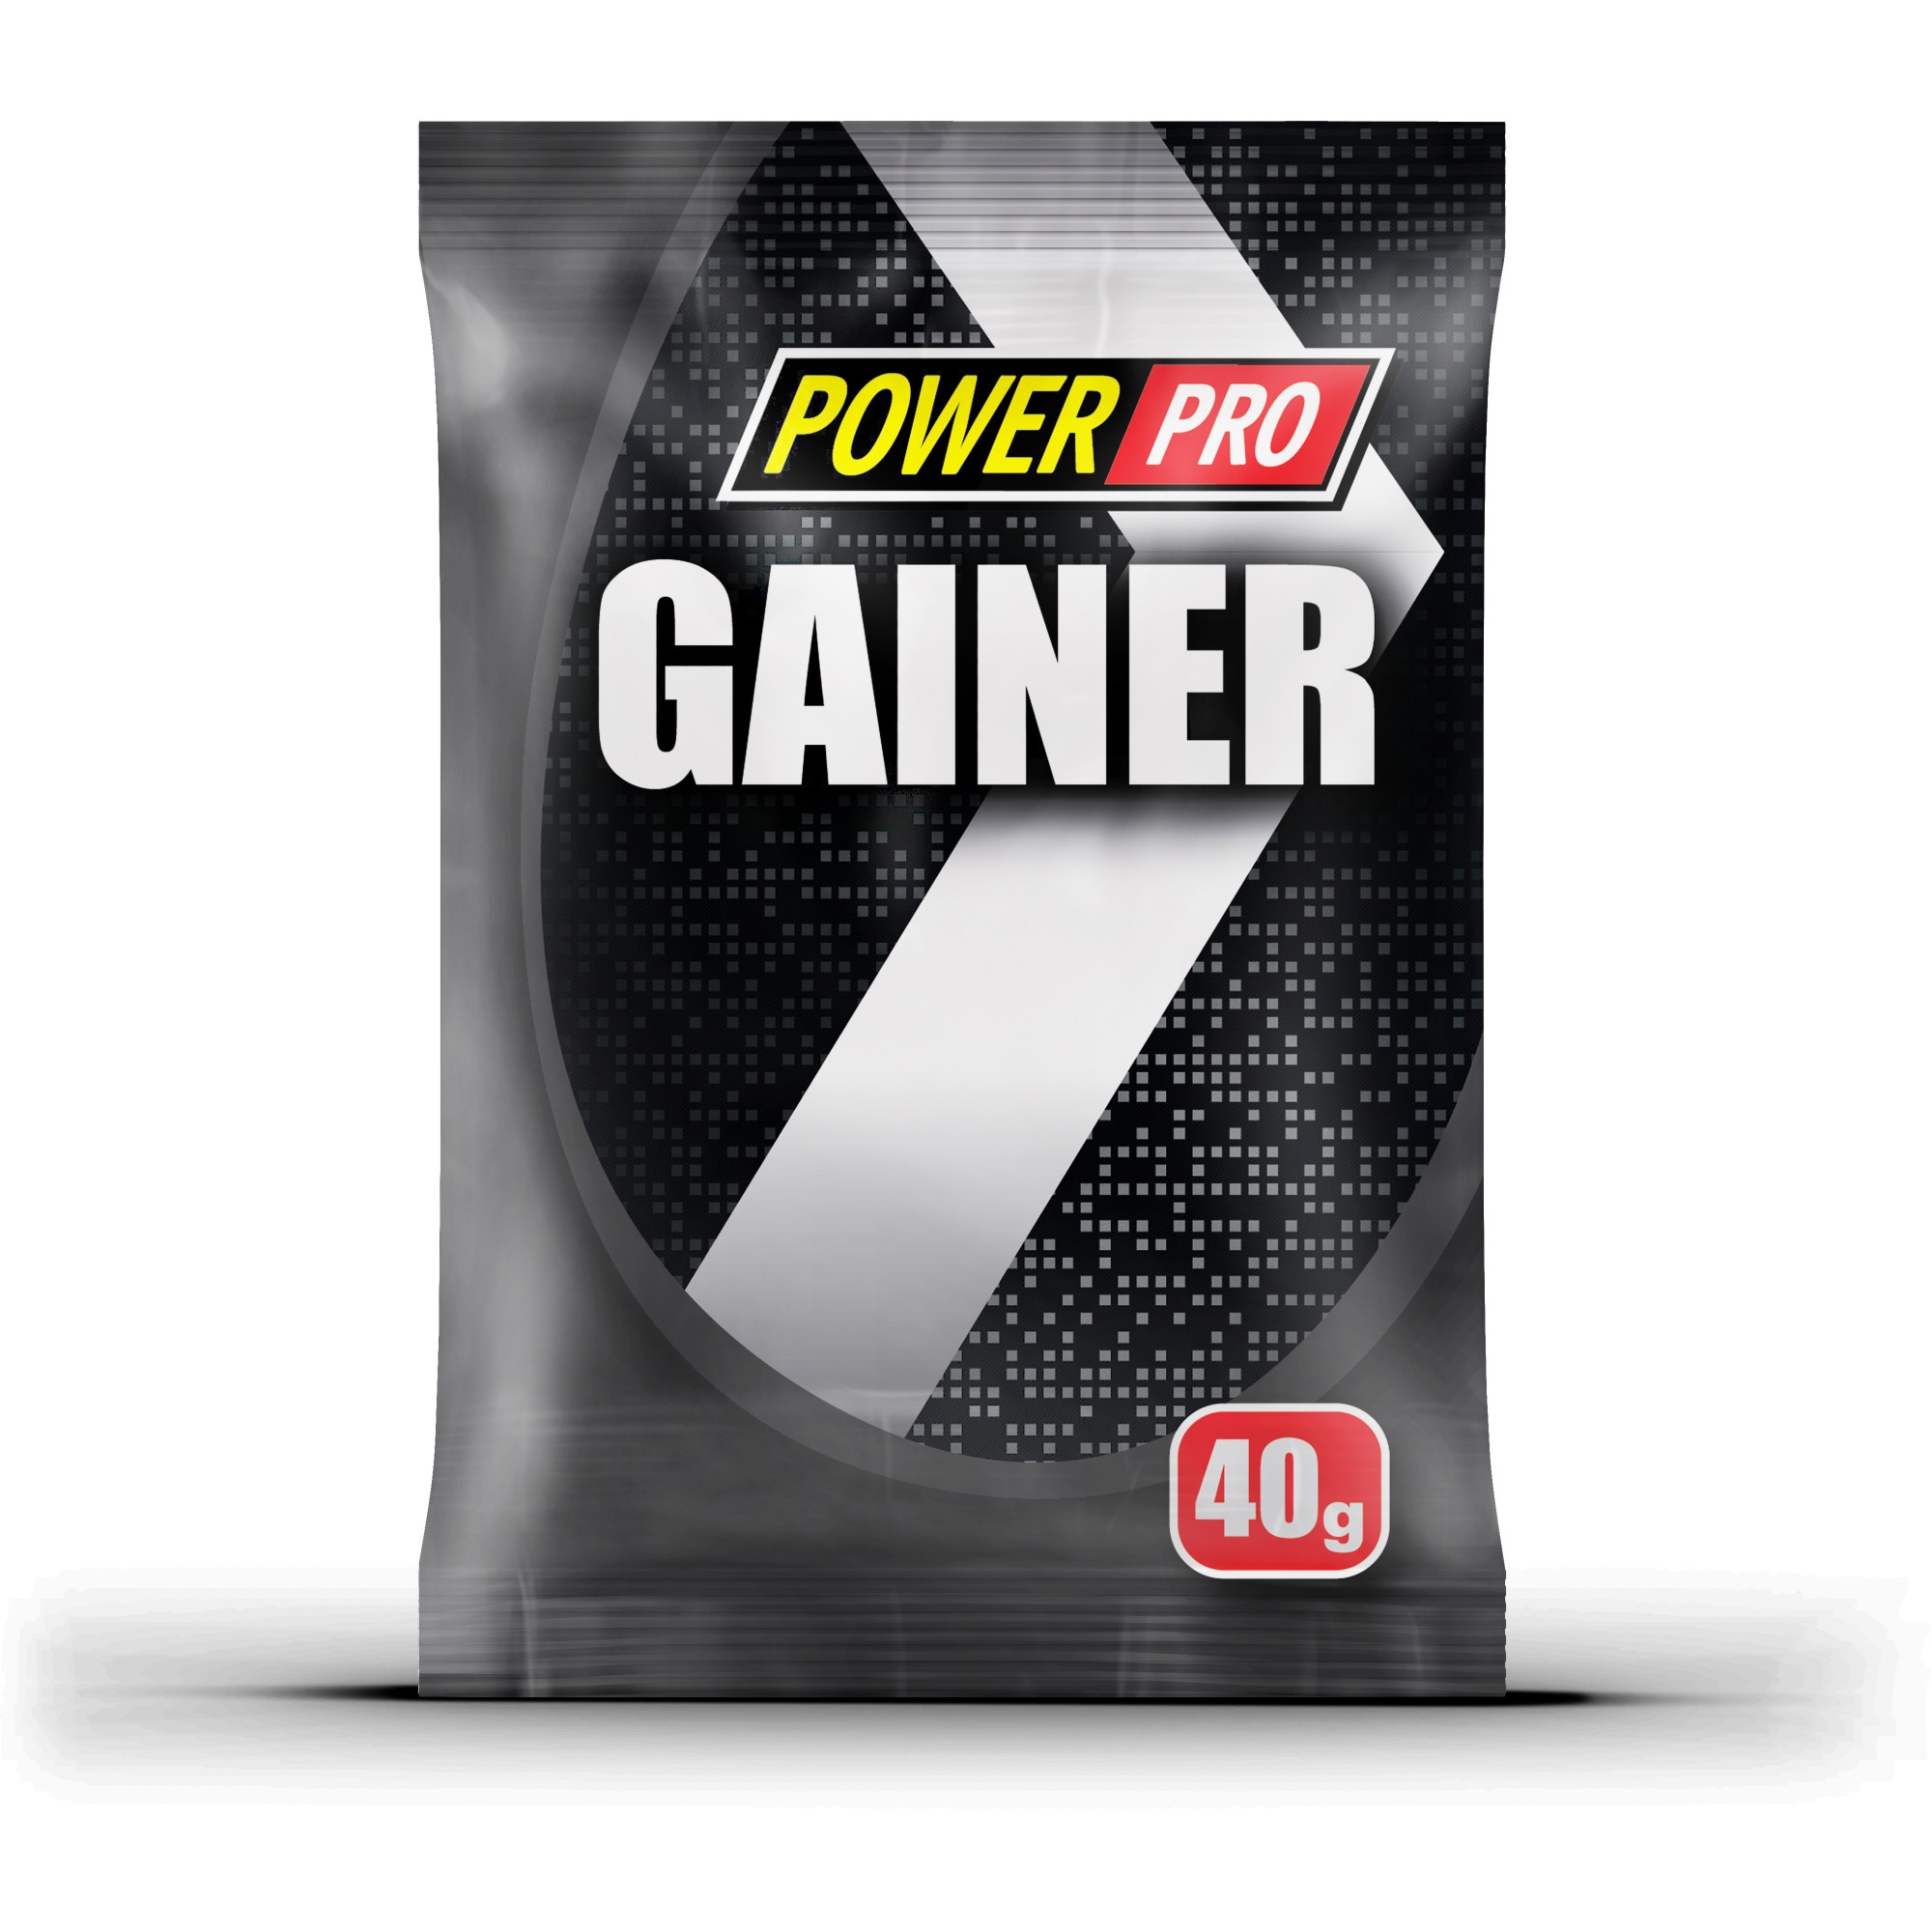 Power Pro Gainer 40 g /пробник/ Ренклод - зображення 1